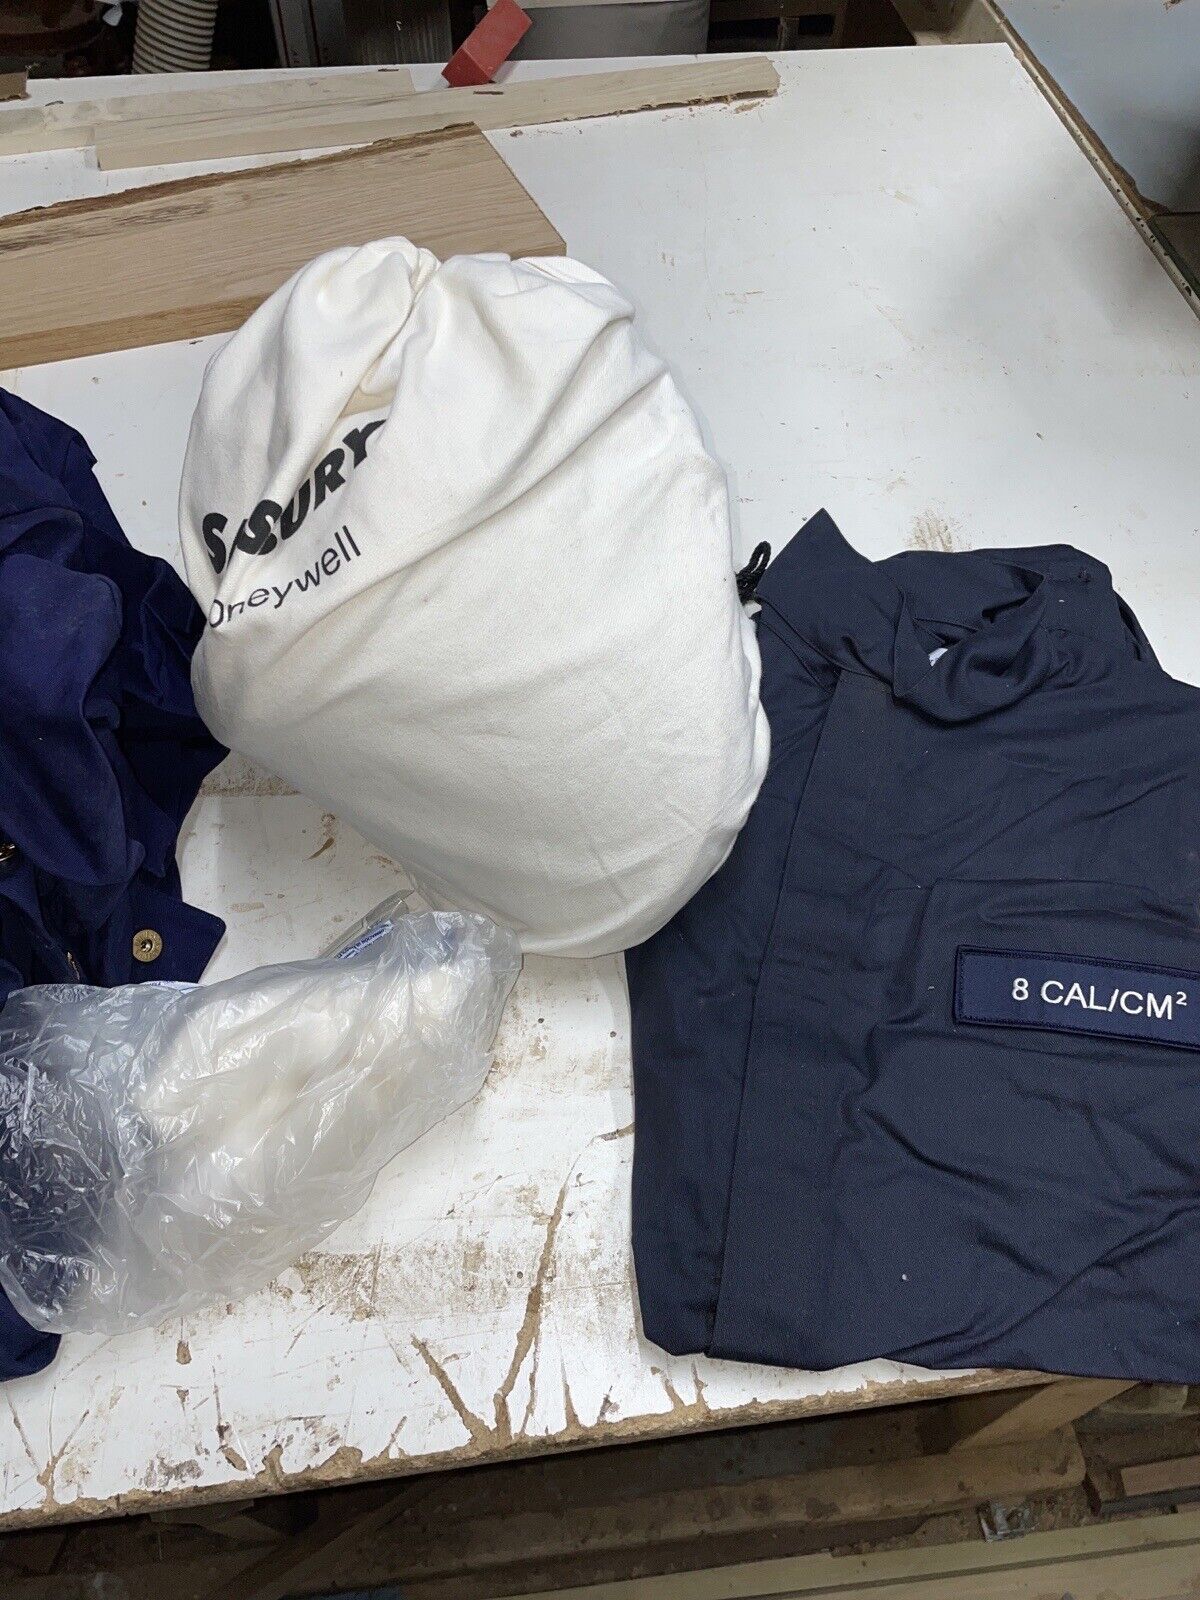 PRO-WEAR Salisbury 8 Cal Arc Flash Suit Kit Overalls/Hood/Glove/Bag Sz  Large